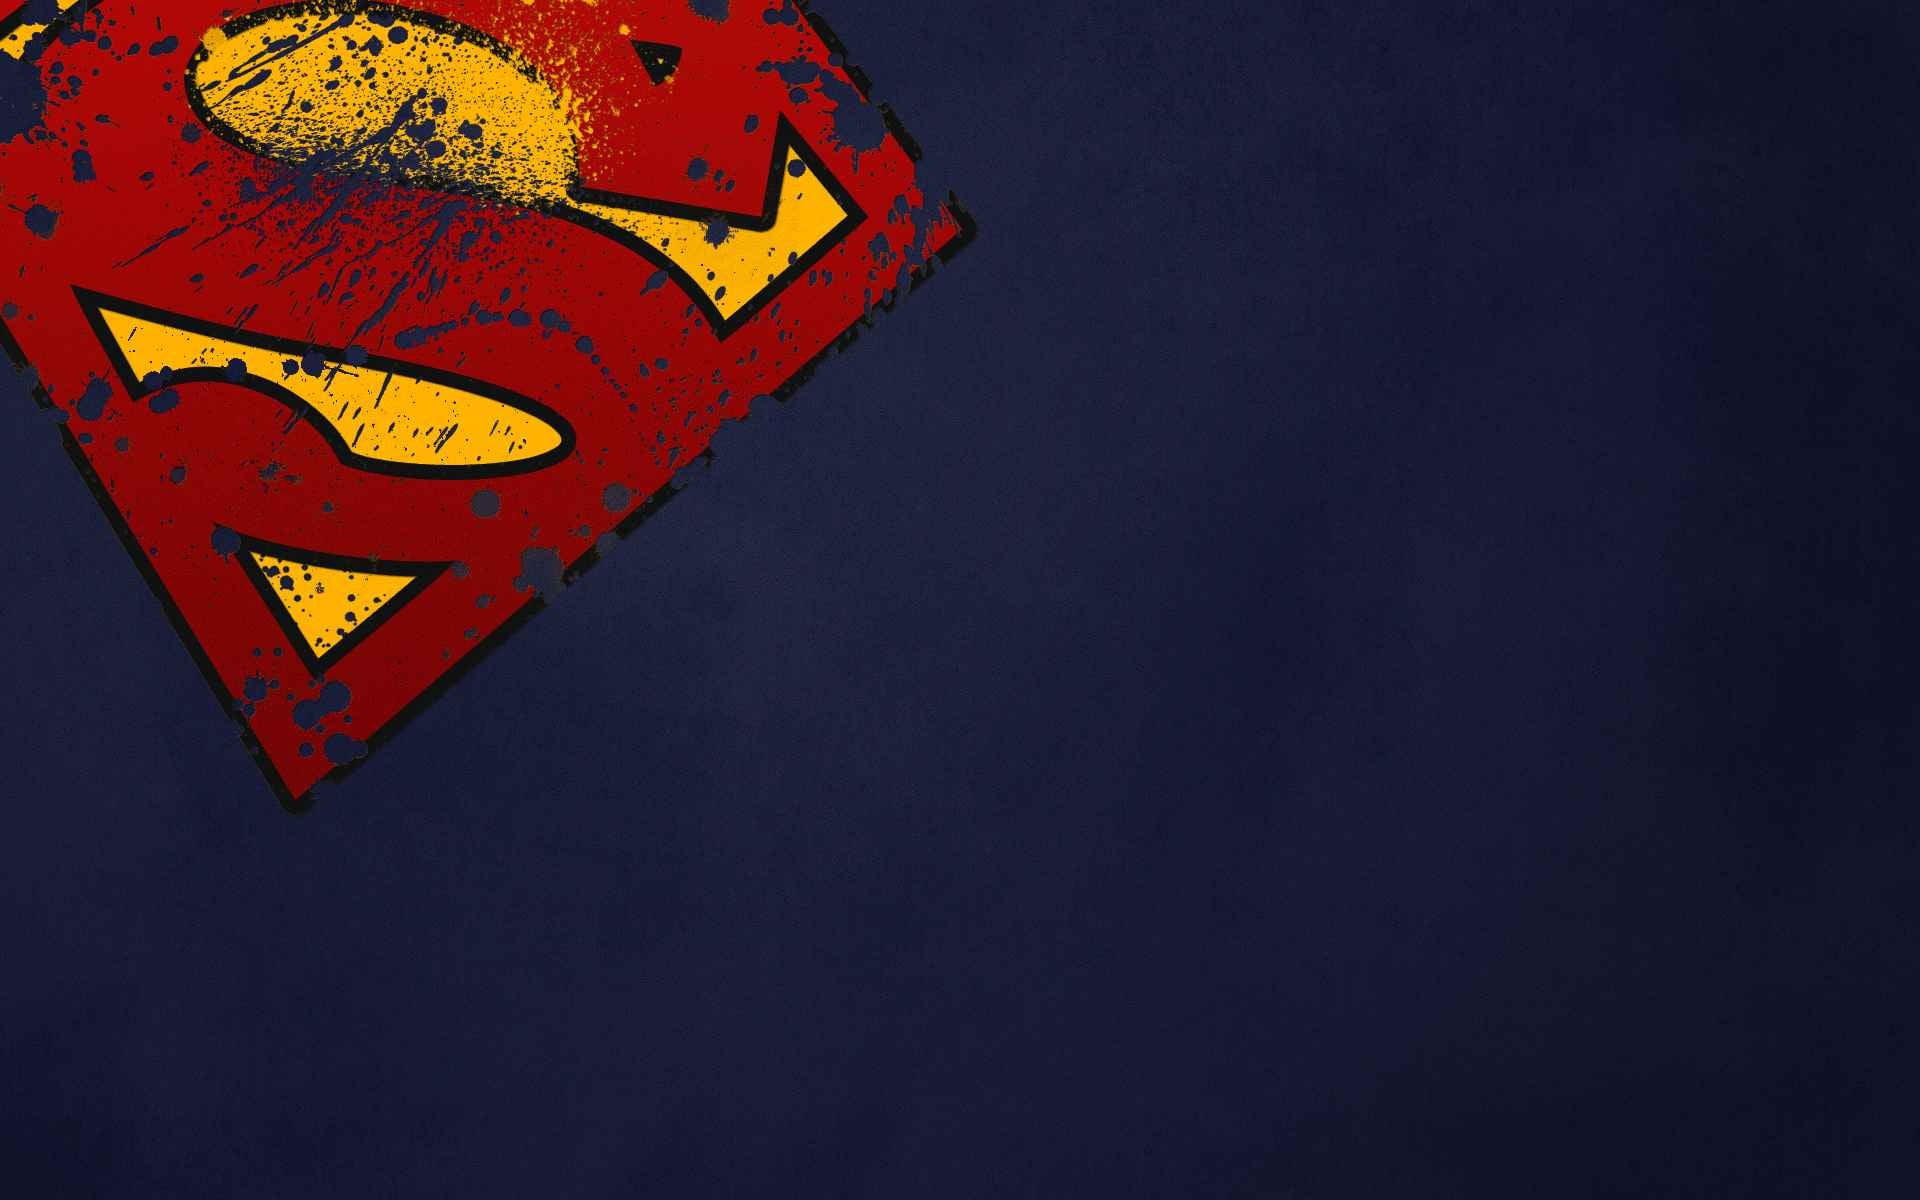 red Superman logo on blue background